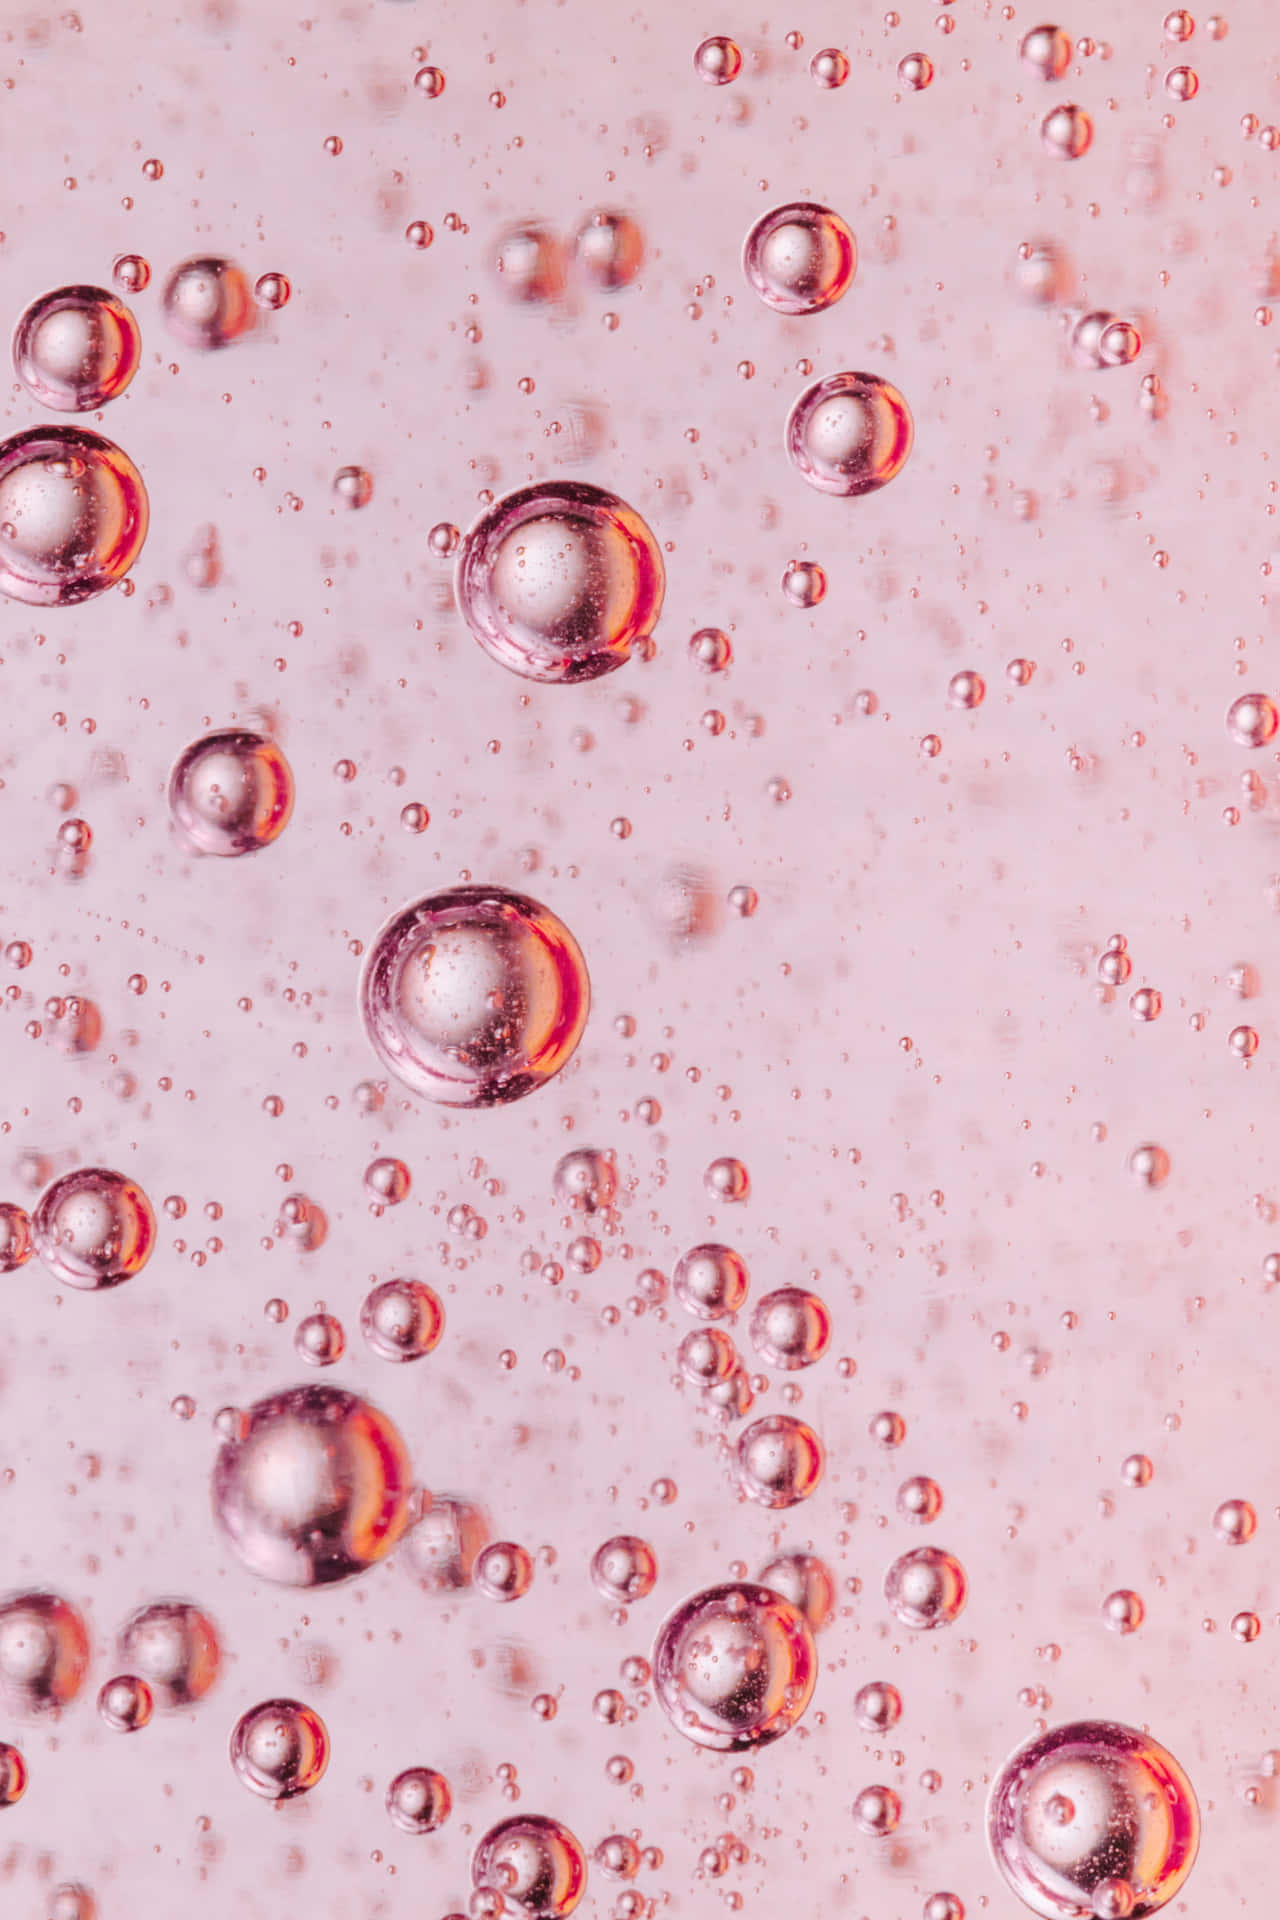 A Close Up Of Bubbles In A Pink Liquid